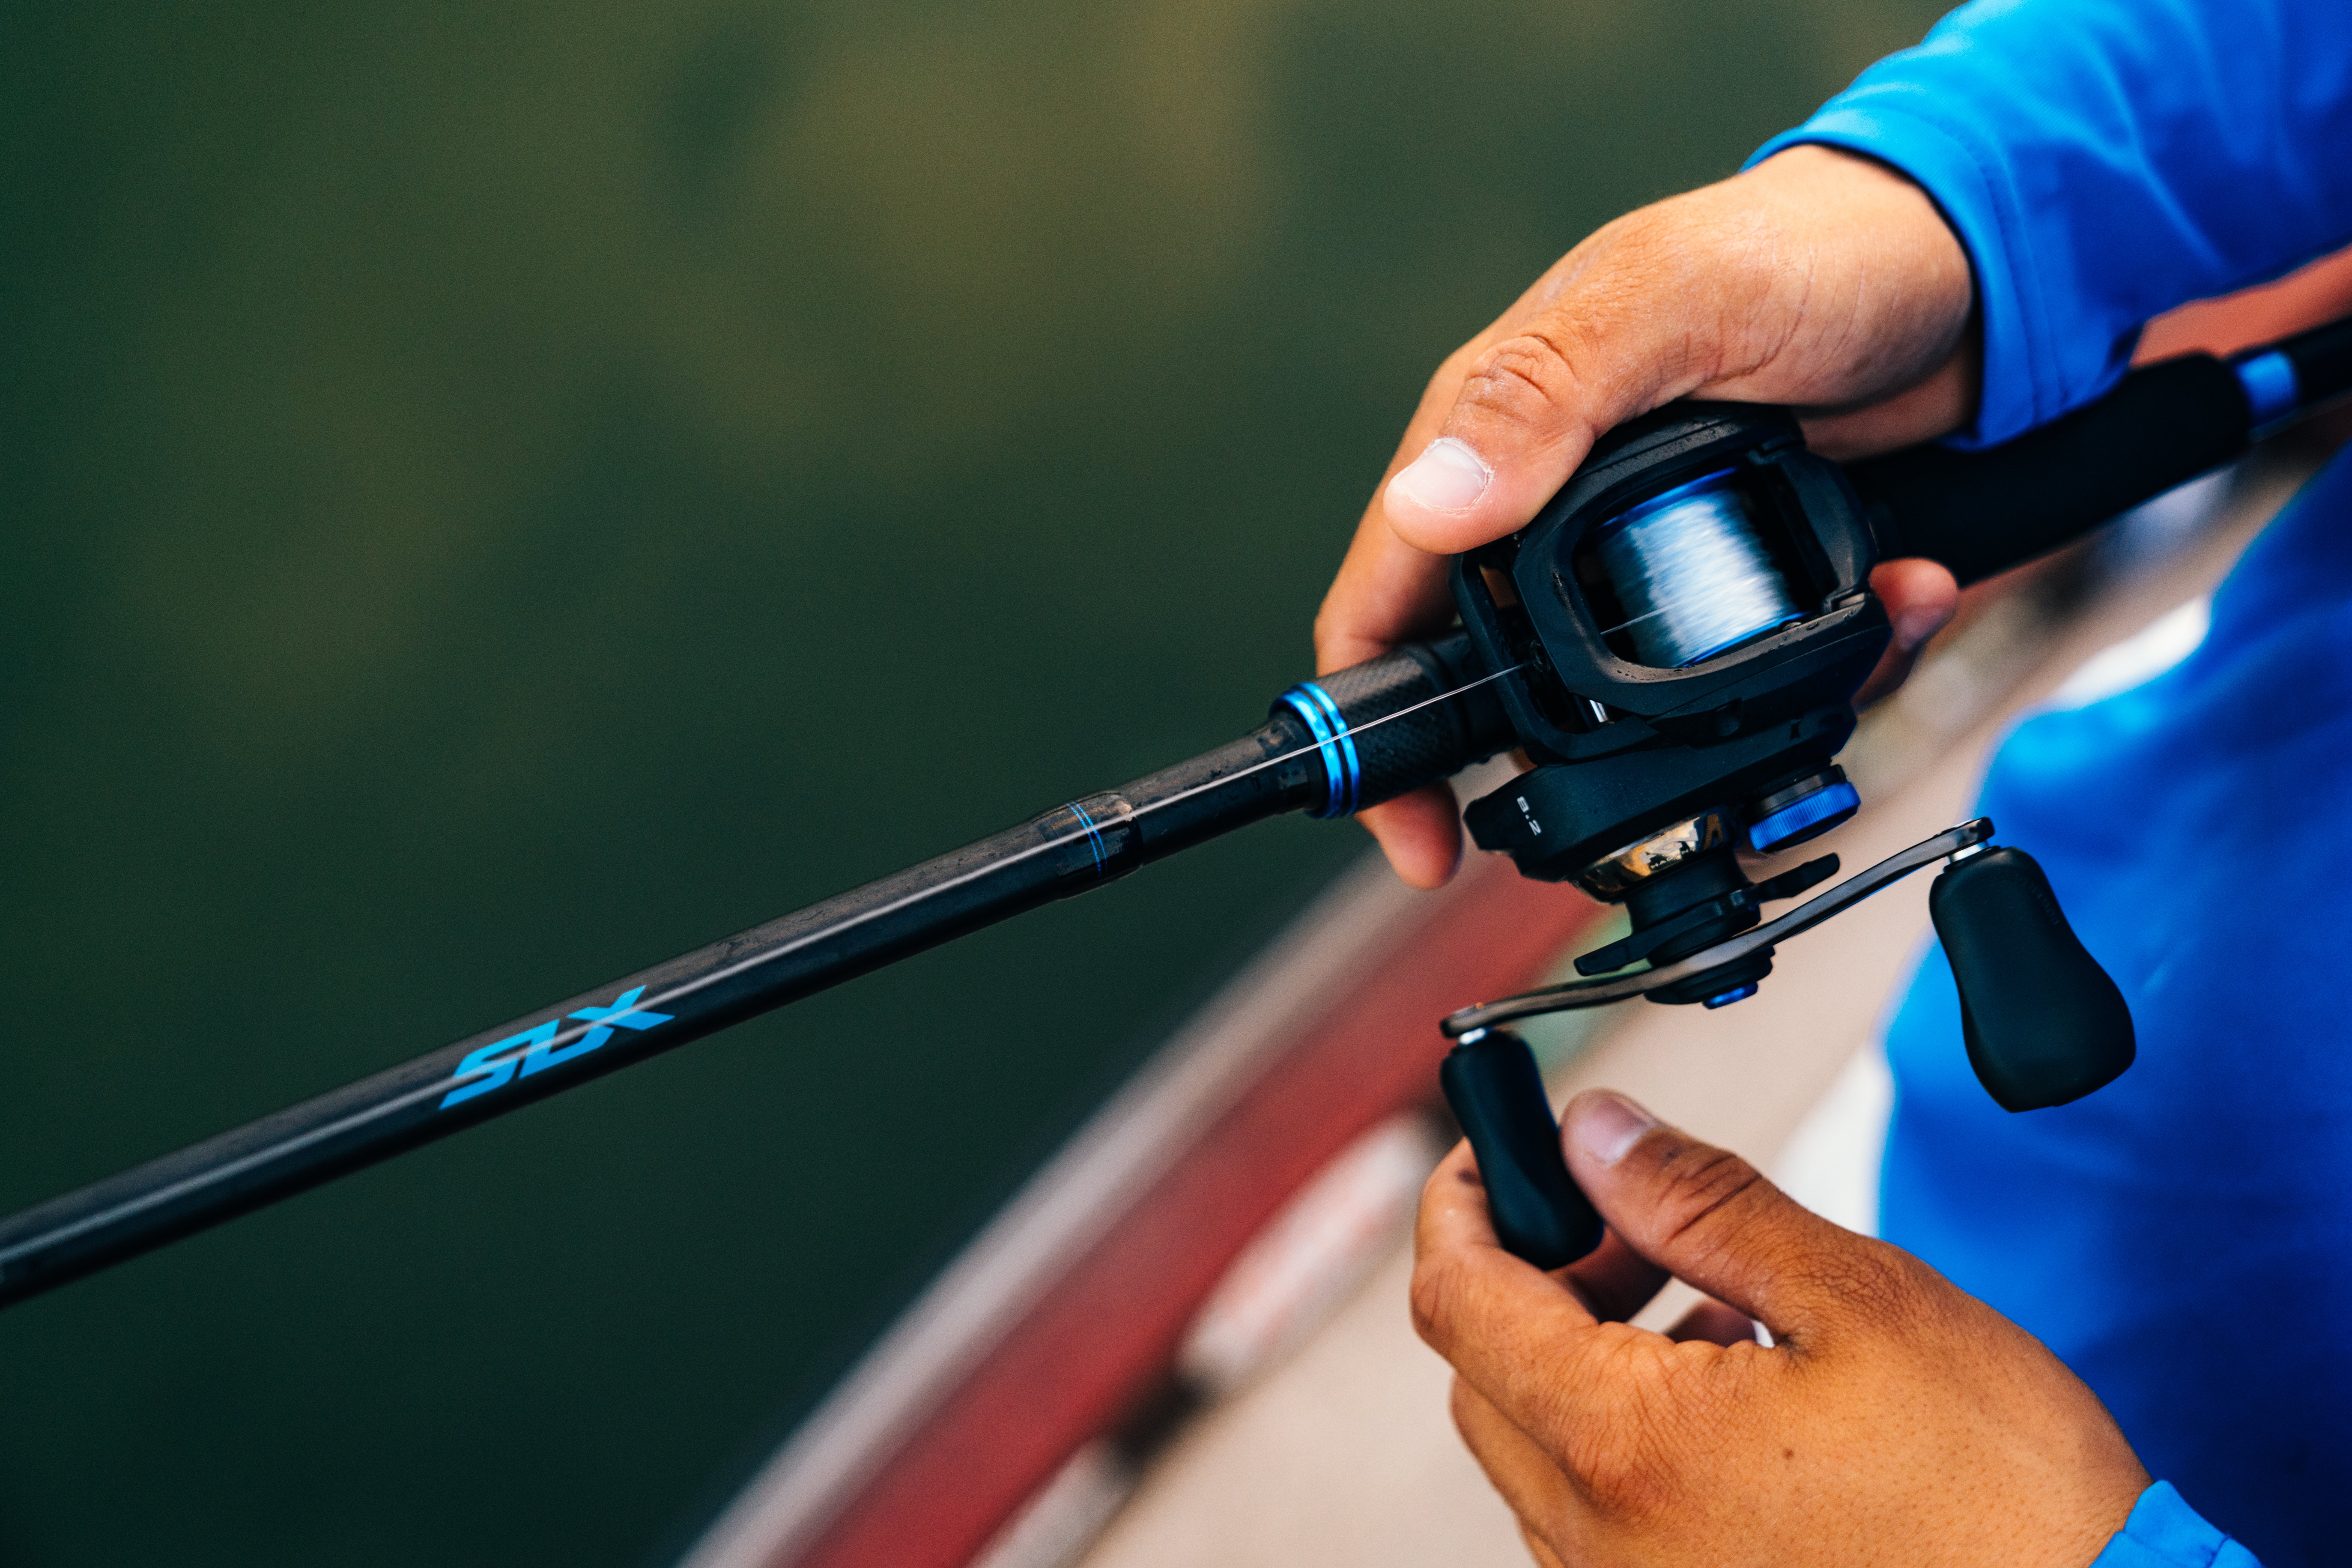 Good budget baitcasters or junk? : r/bassfishing